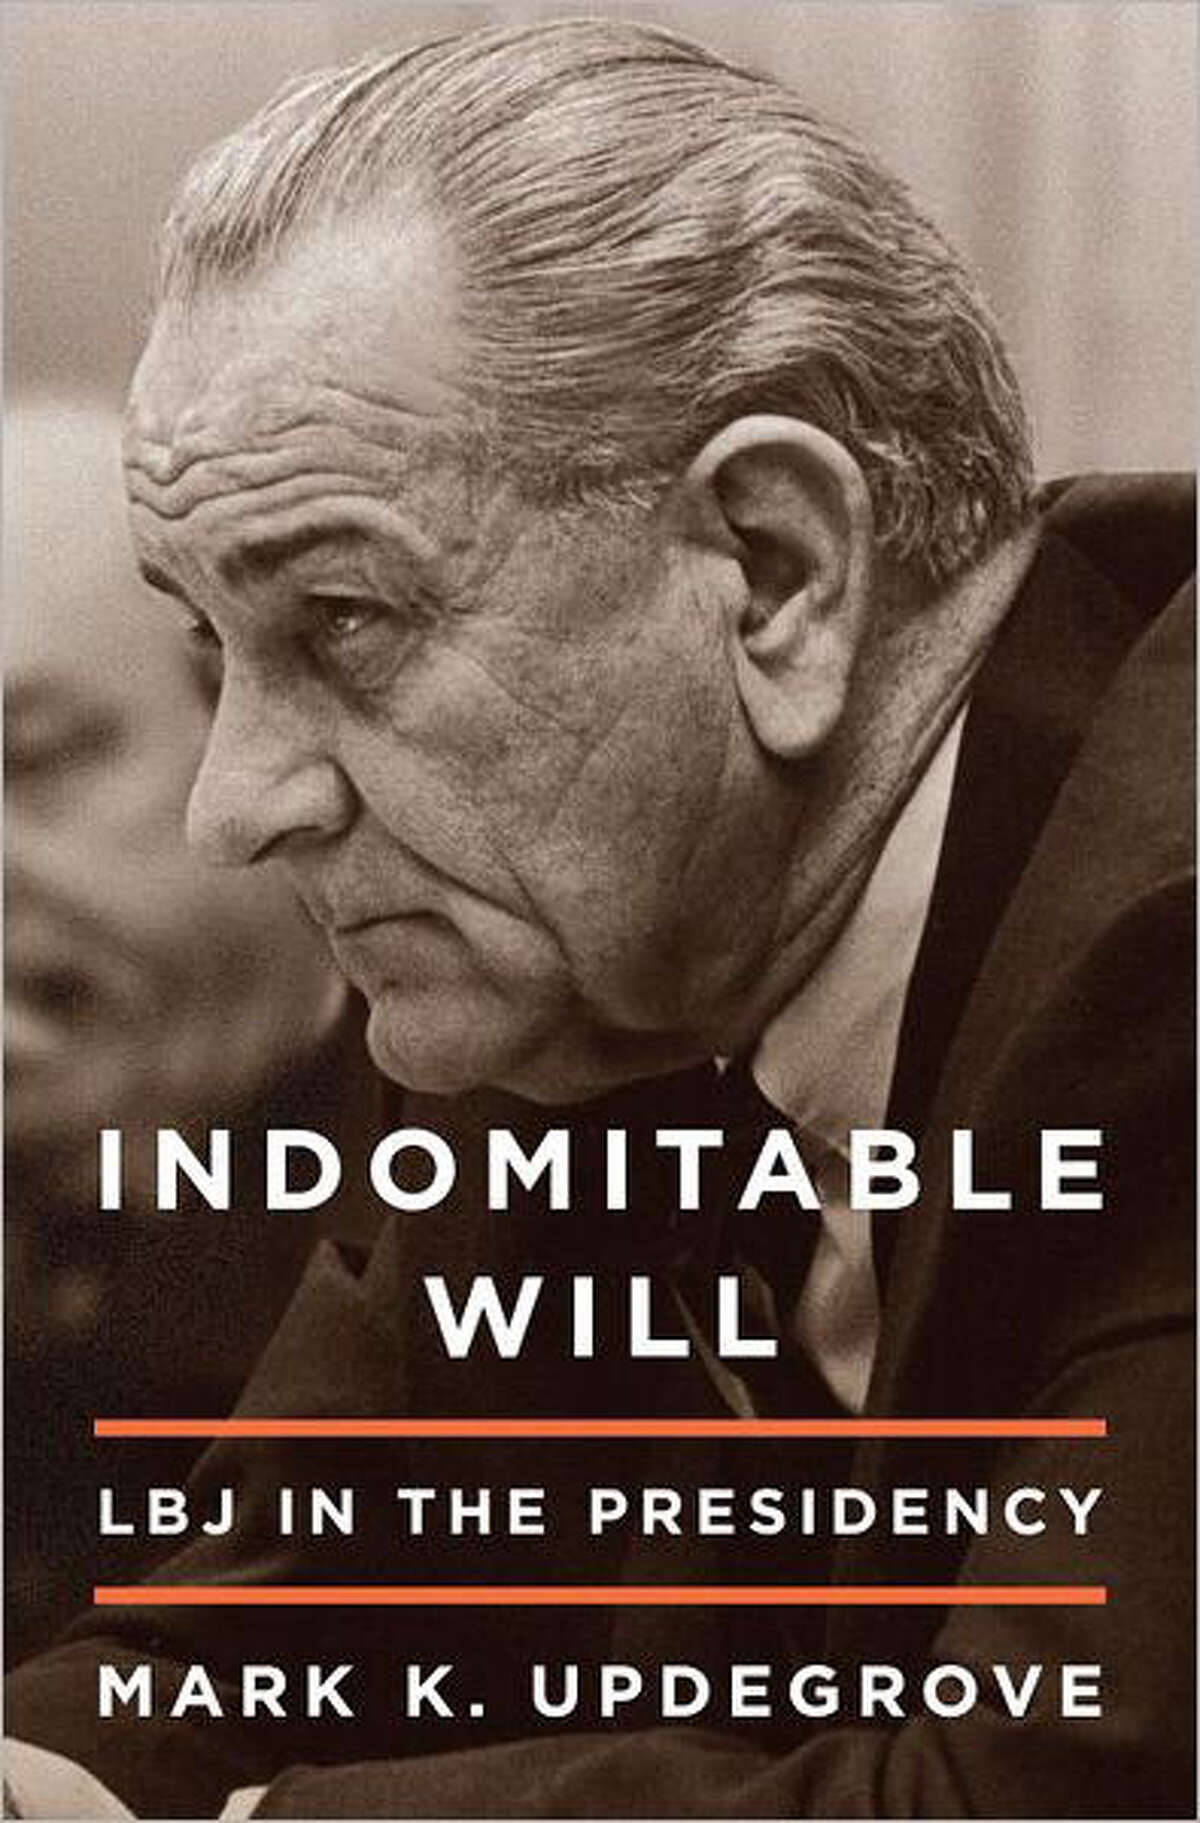 "Indomitable Will: LBJ in the Presidency" by Mark K. Updegrove